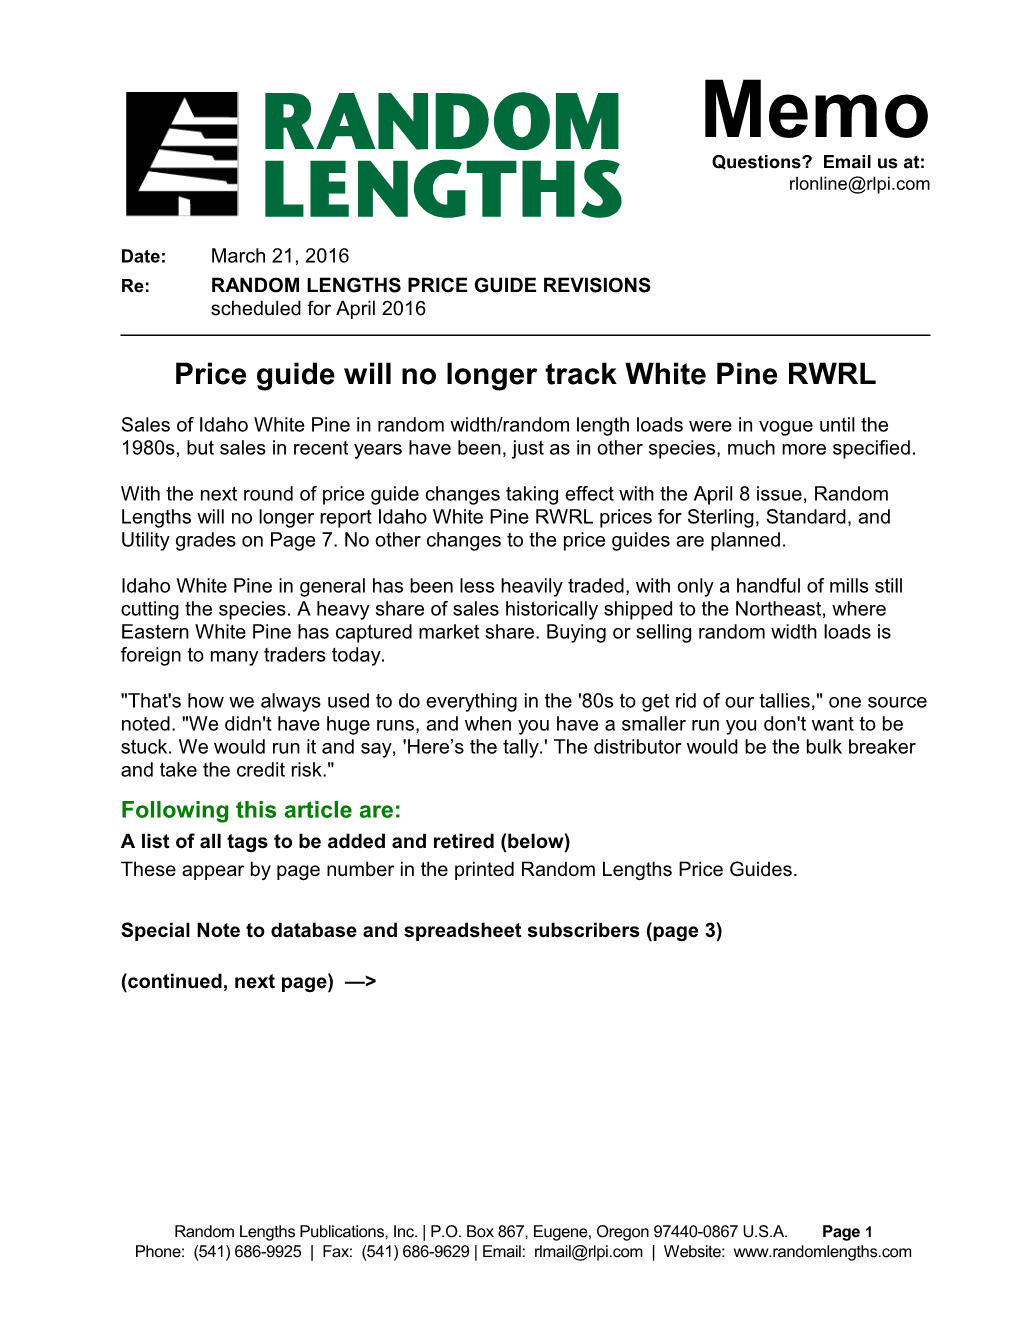 Price Guide Will No Longer Track White Pine RWRL